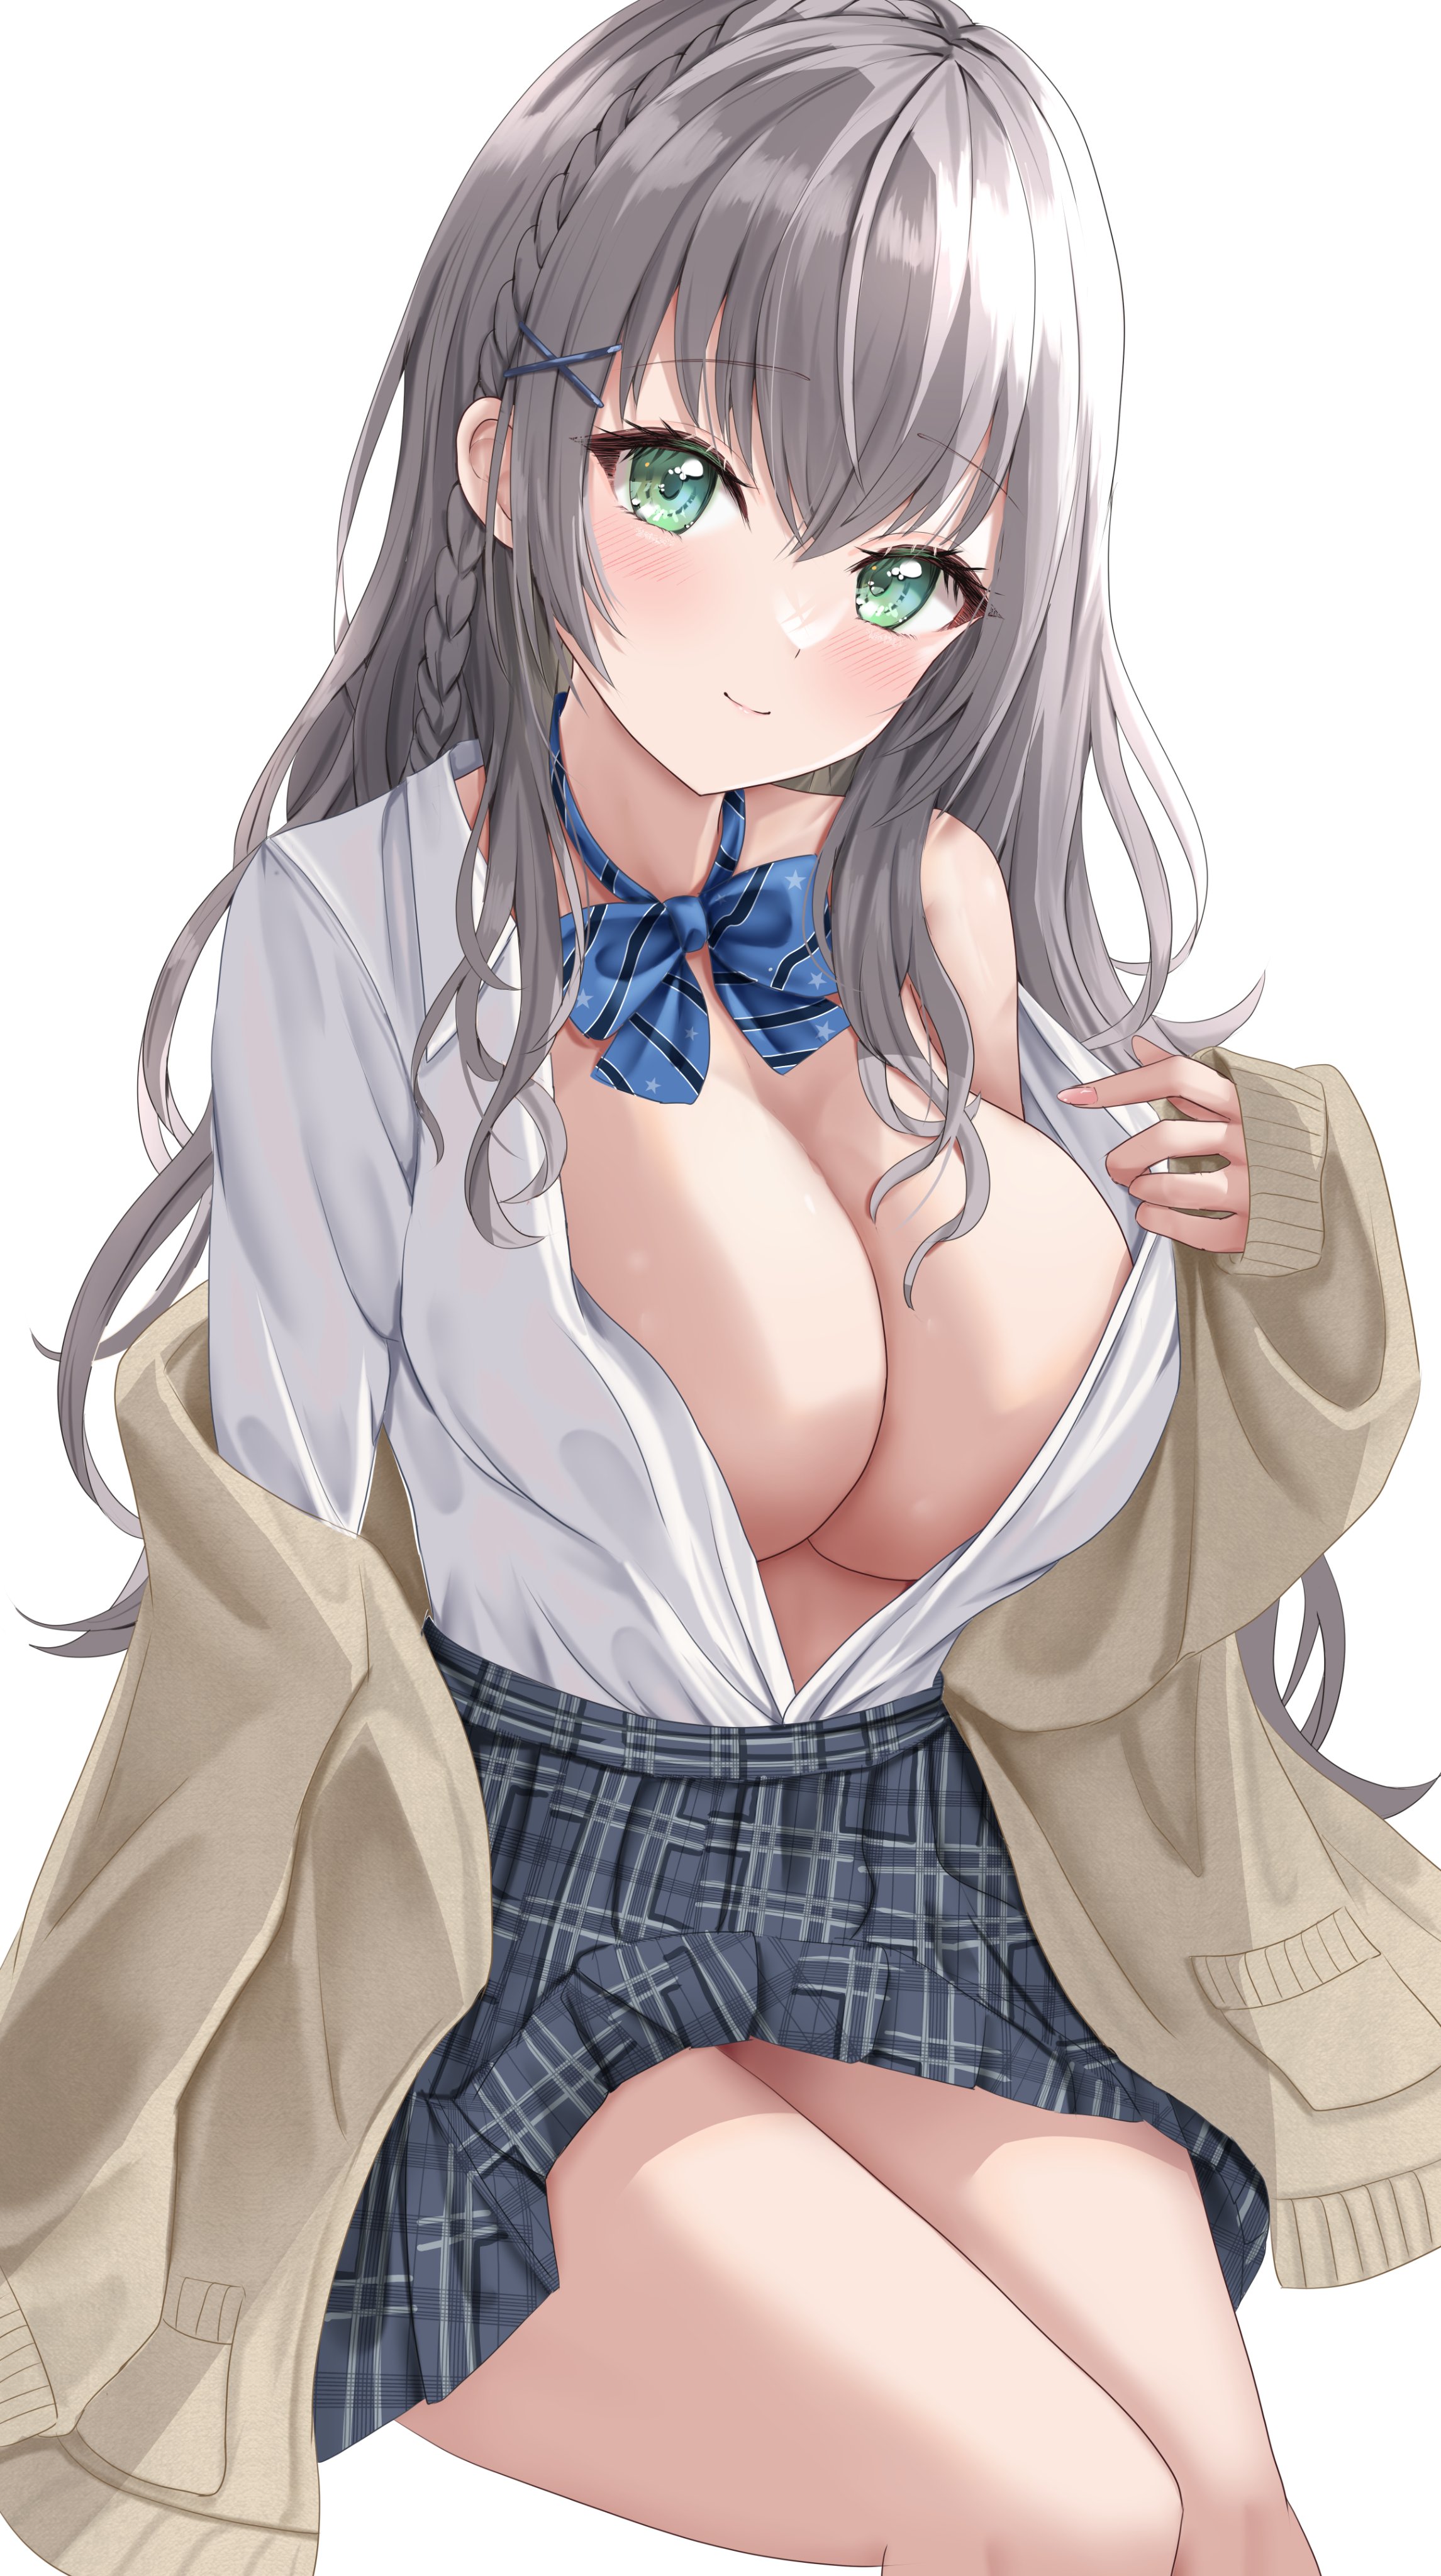 Anime 2291x4096 anime girls boobs open shirt no bra bow tie schoolgirl school uniform braids blue eyes portrait display big boobs